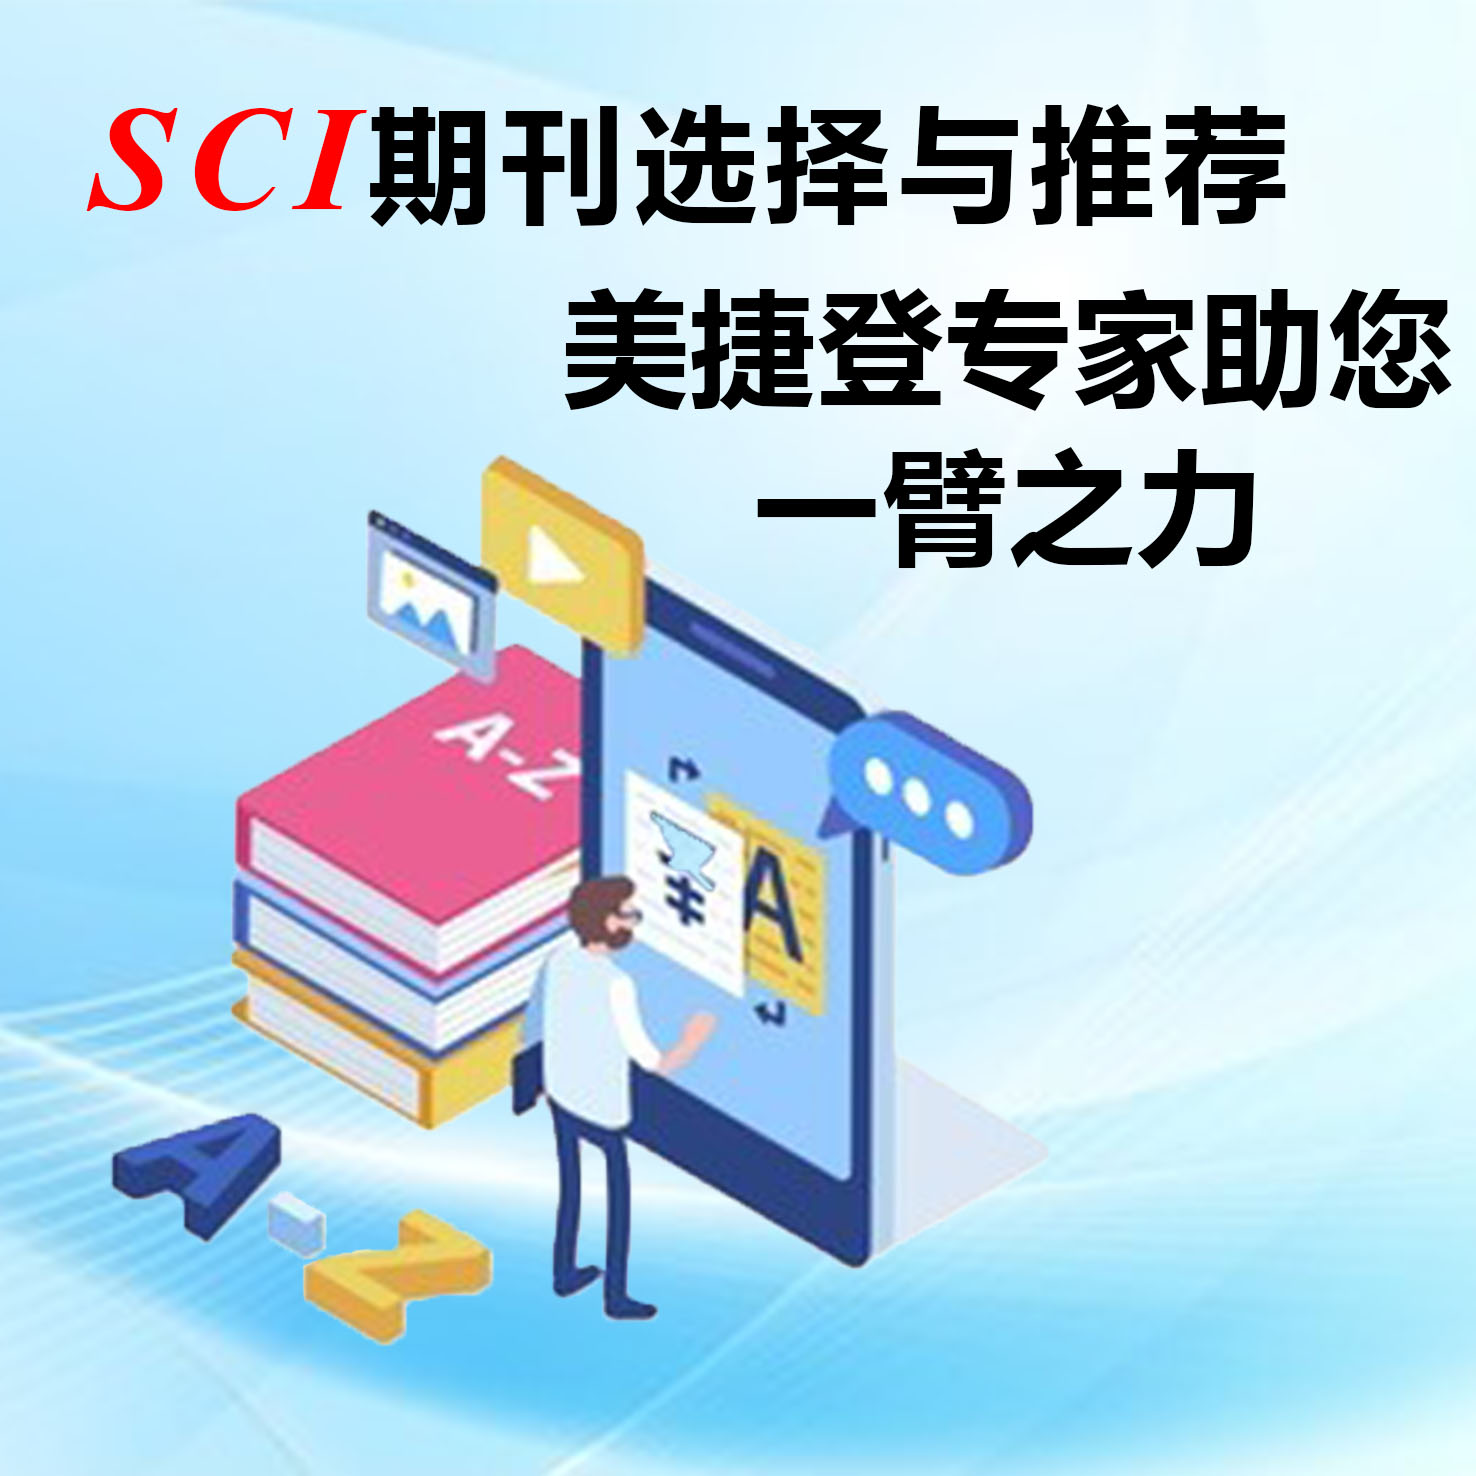 SCI推荐杂志服务3份